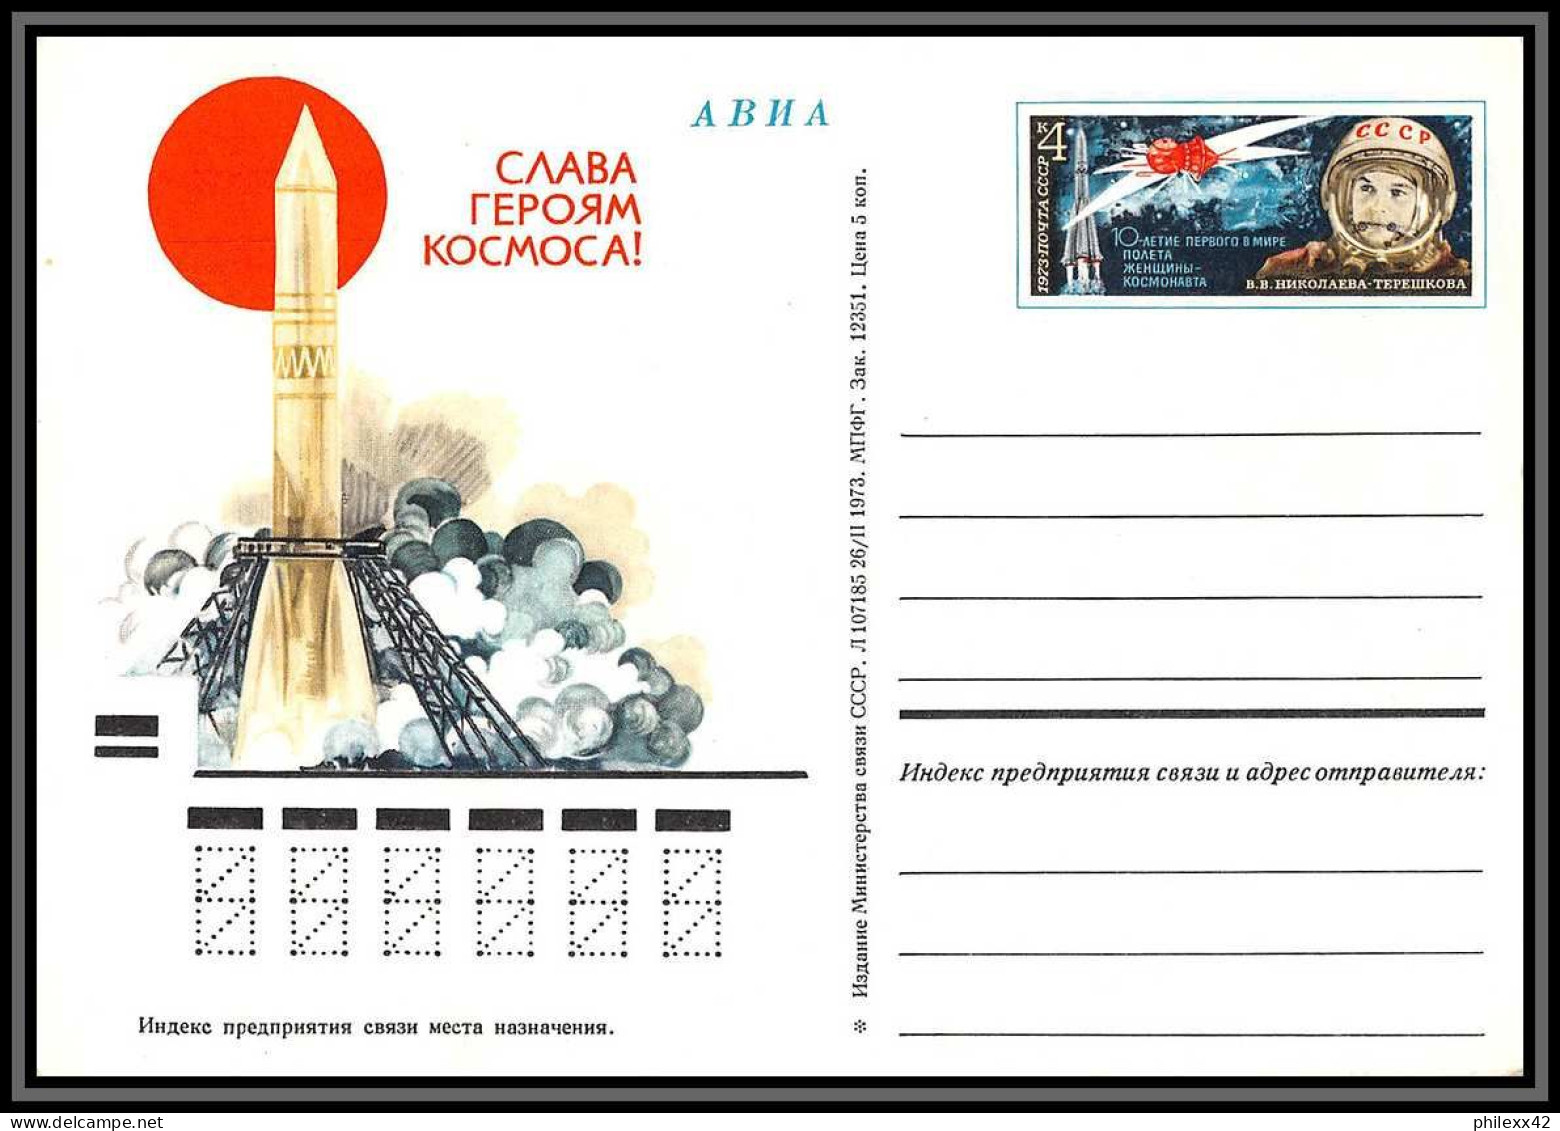 3399 Espace space lot de 8 Entier postal Stationery Russie (Russia urss USSR) cosmonauts day gagarine gagarin